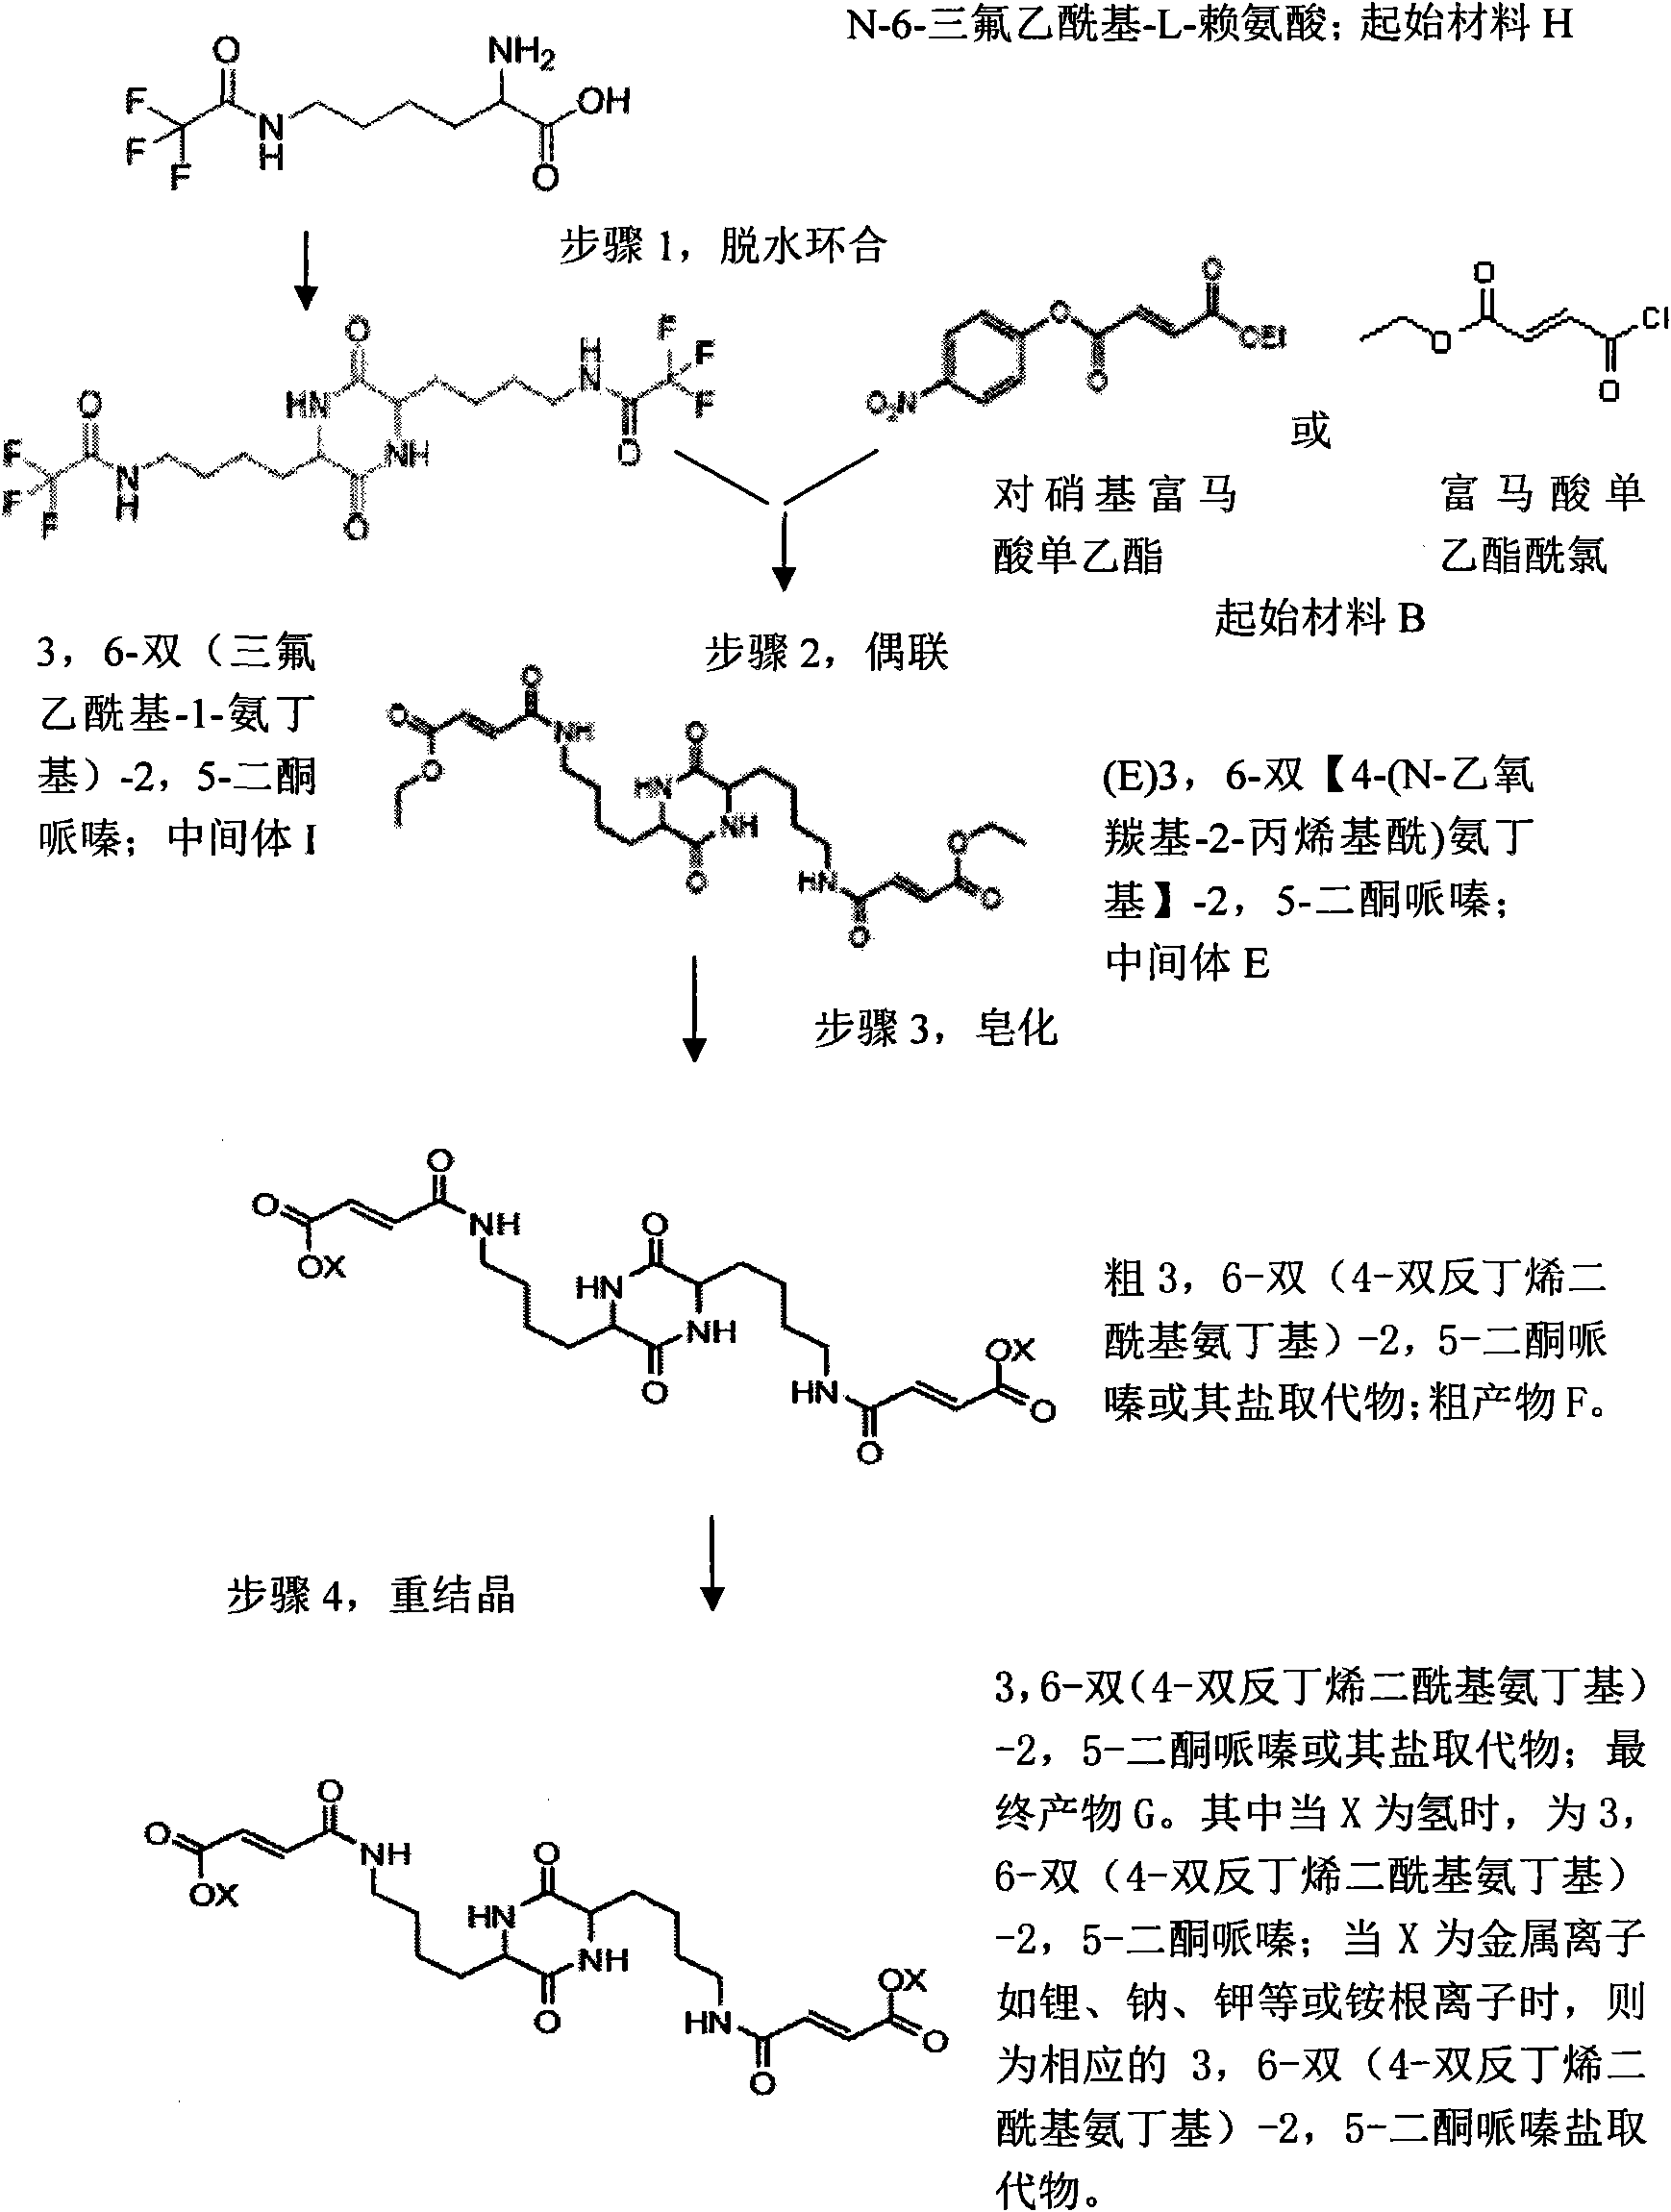 Synthetic methods of 3,6-bis(4-bisfumaroyl aminobutyl)-2,5-diketopiperazine and salt substitute thereof